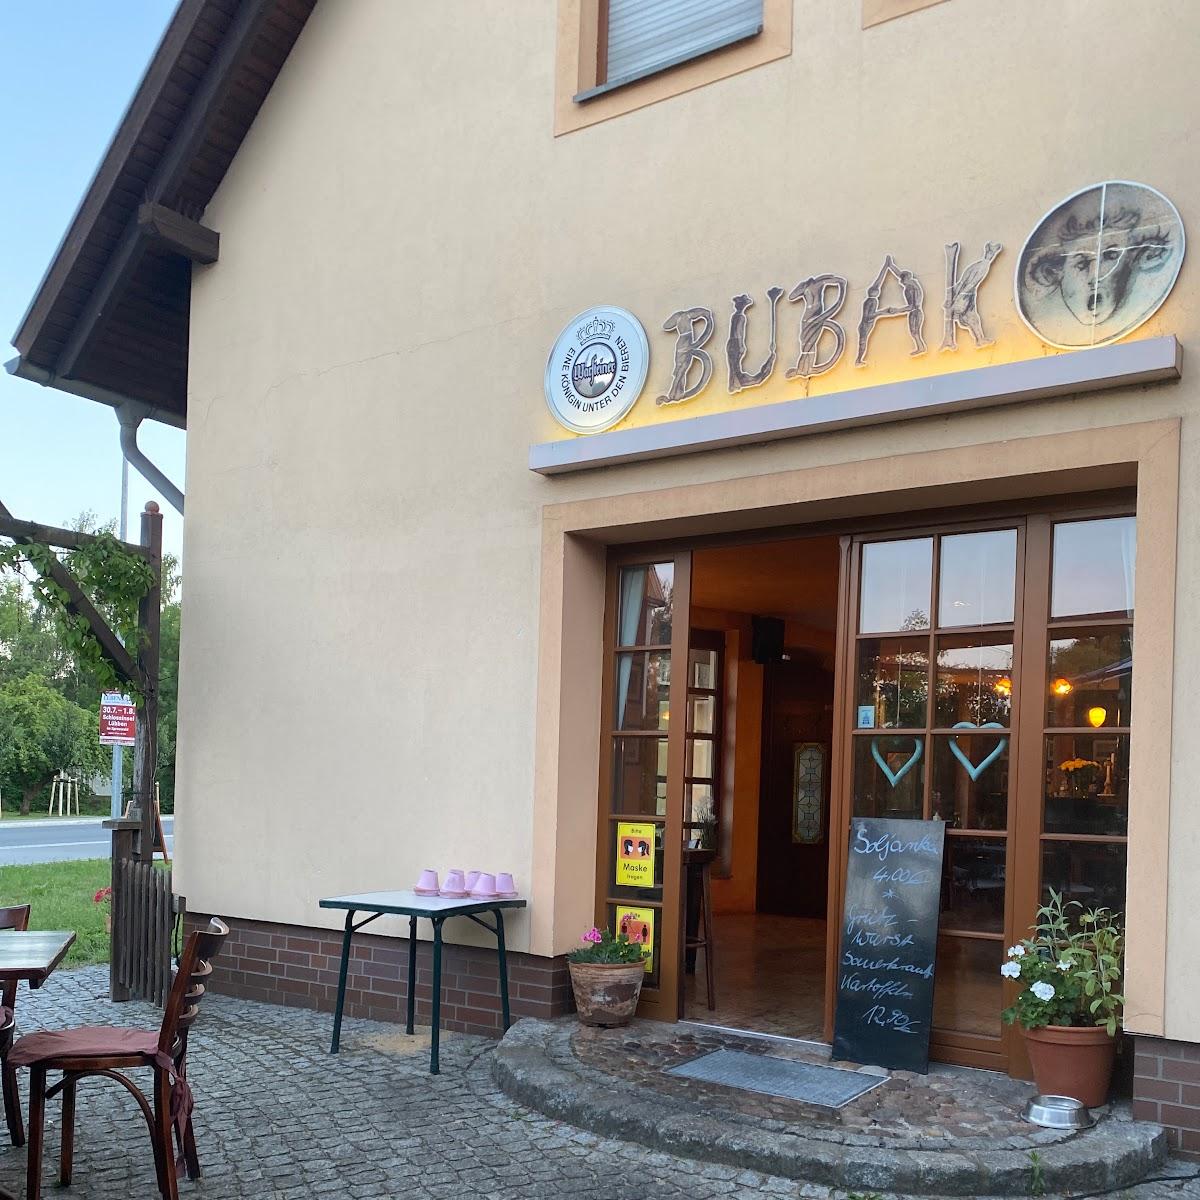 Restaurant "Spreewaldrestaurant BUBAK" in Lübben (Spreewald)